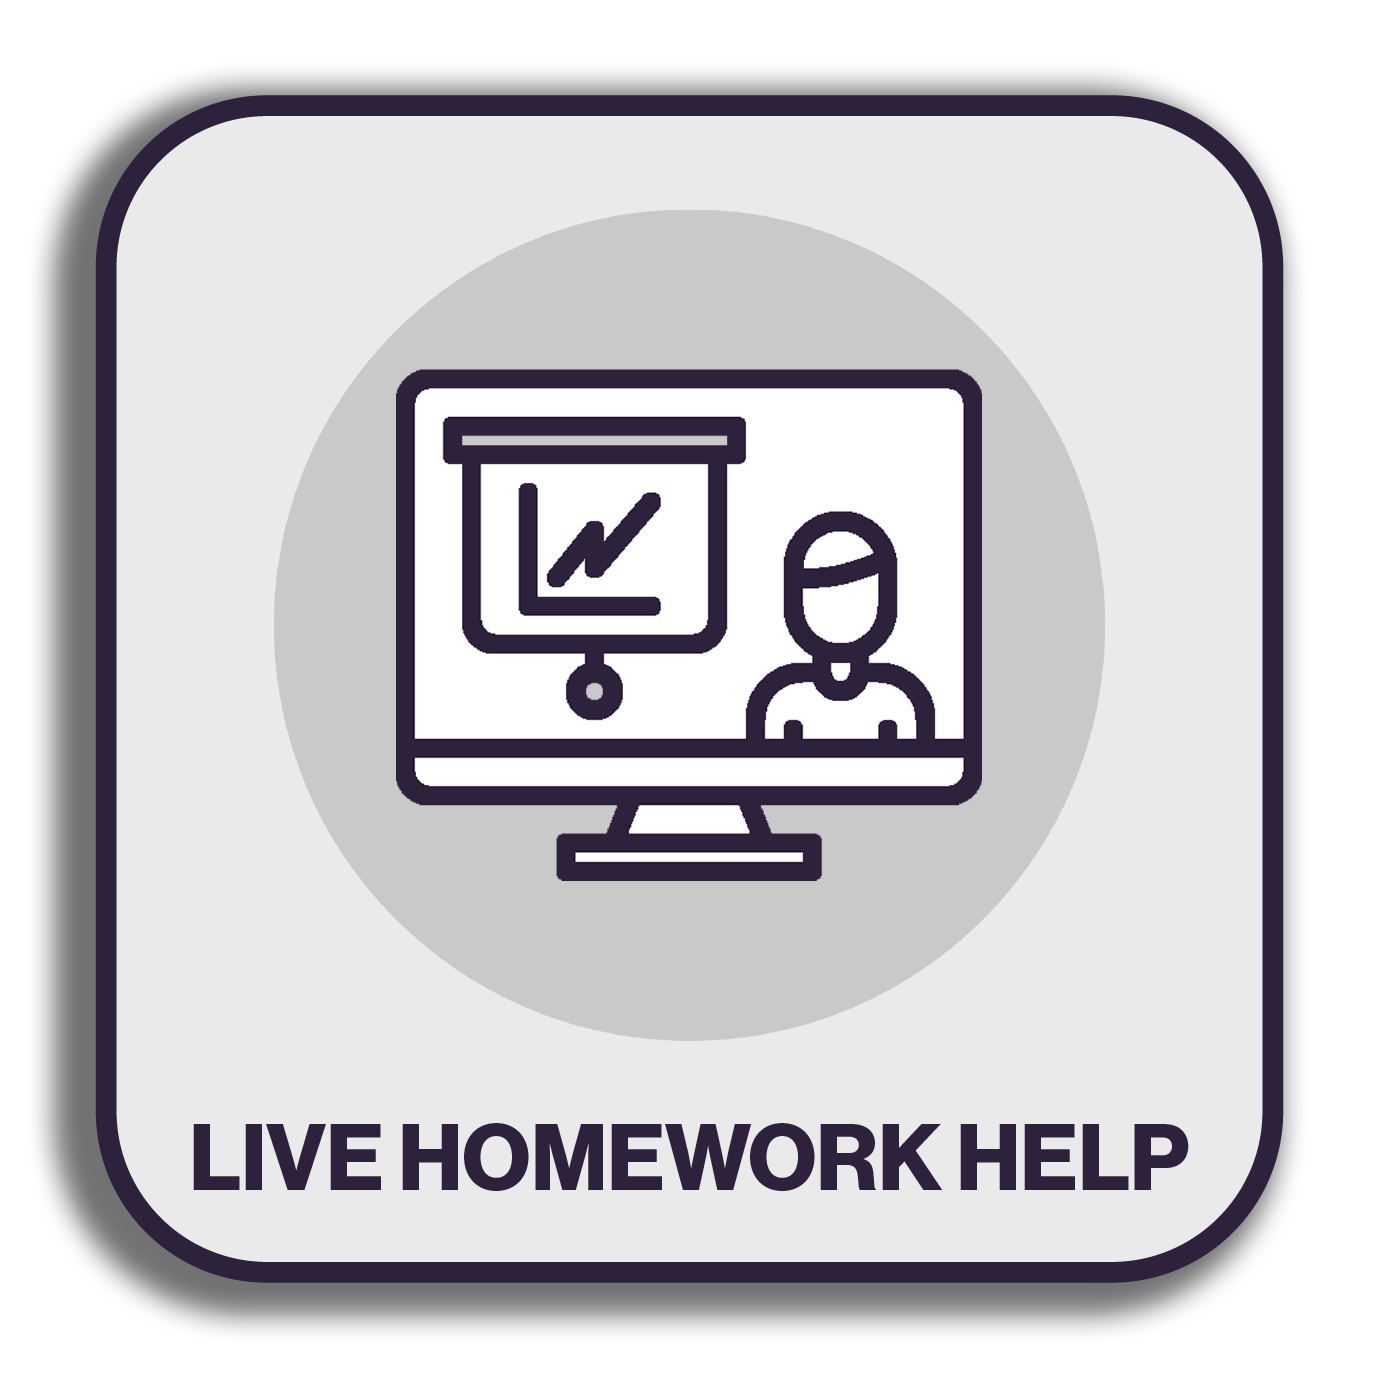 Live homework help icon